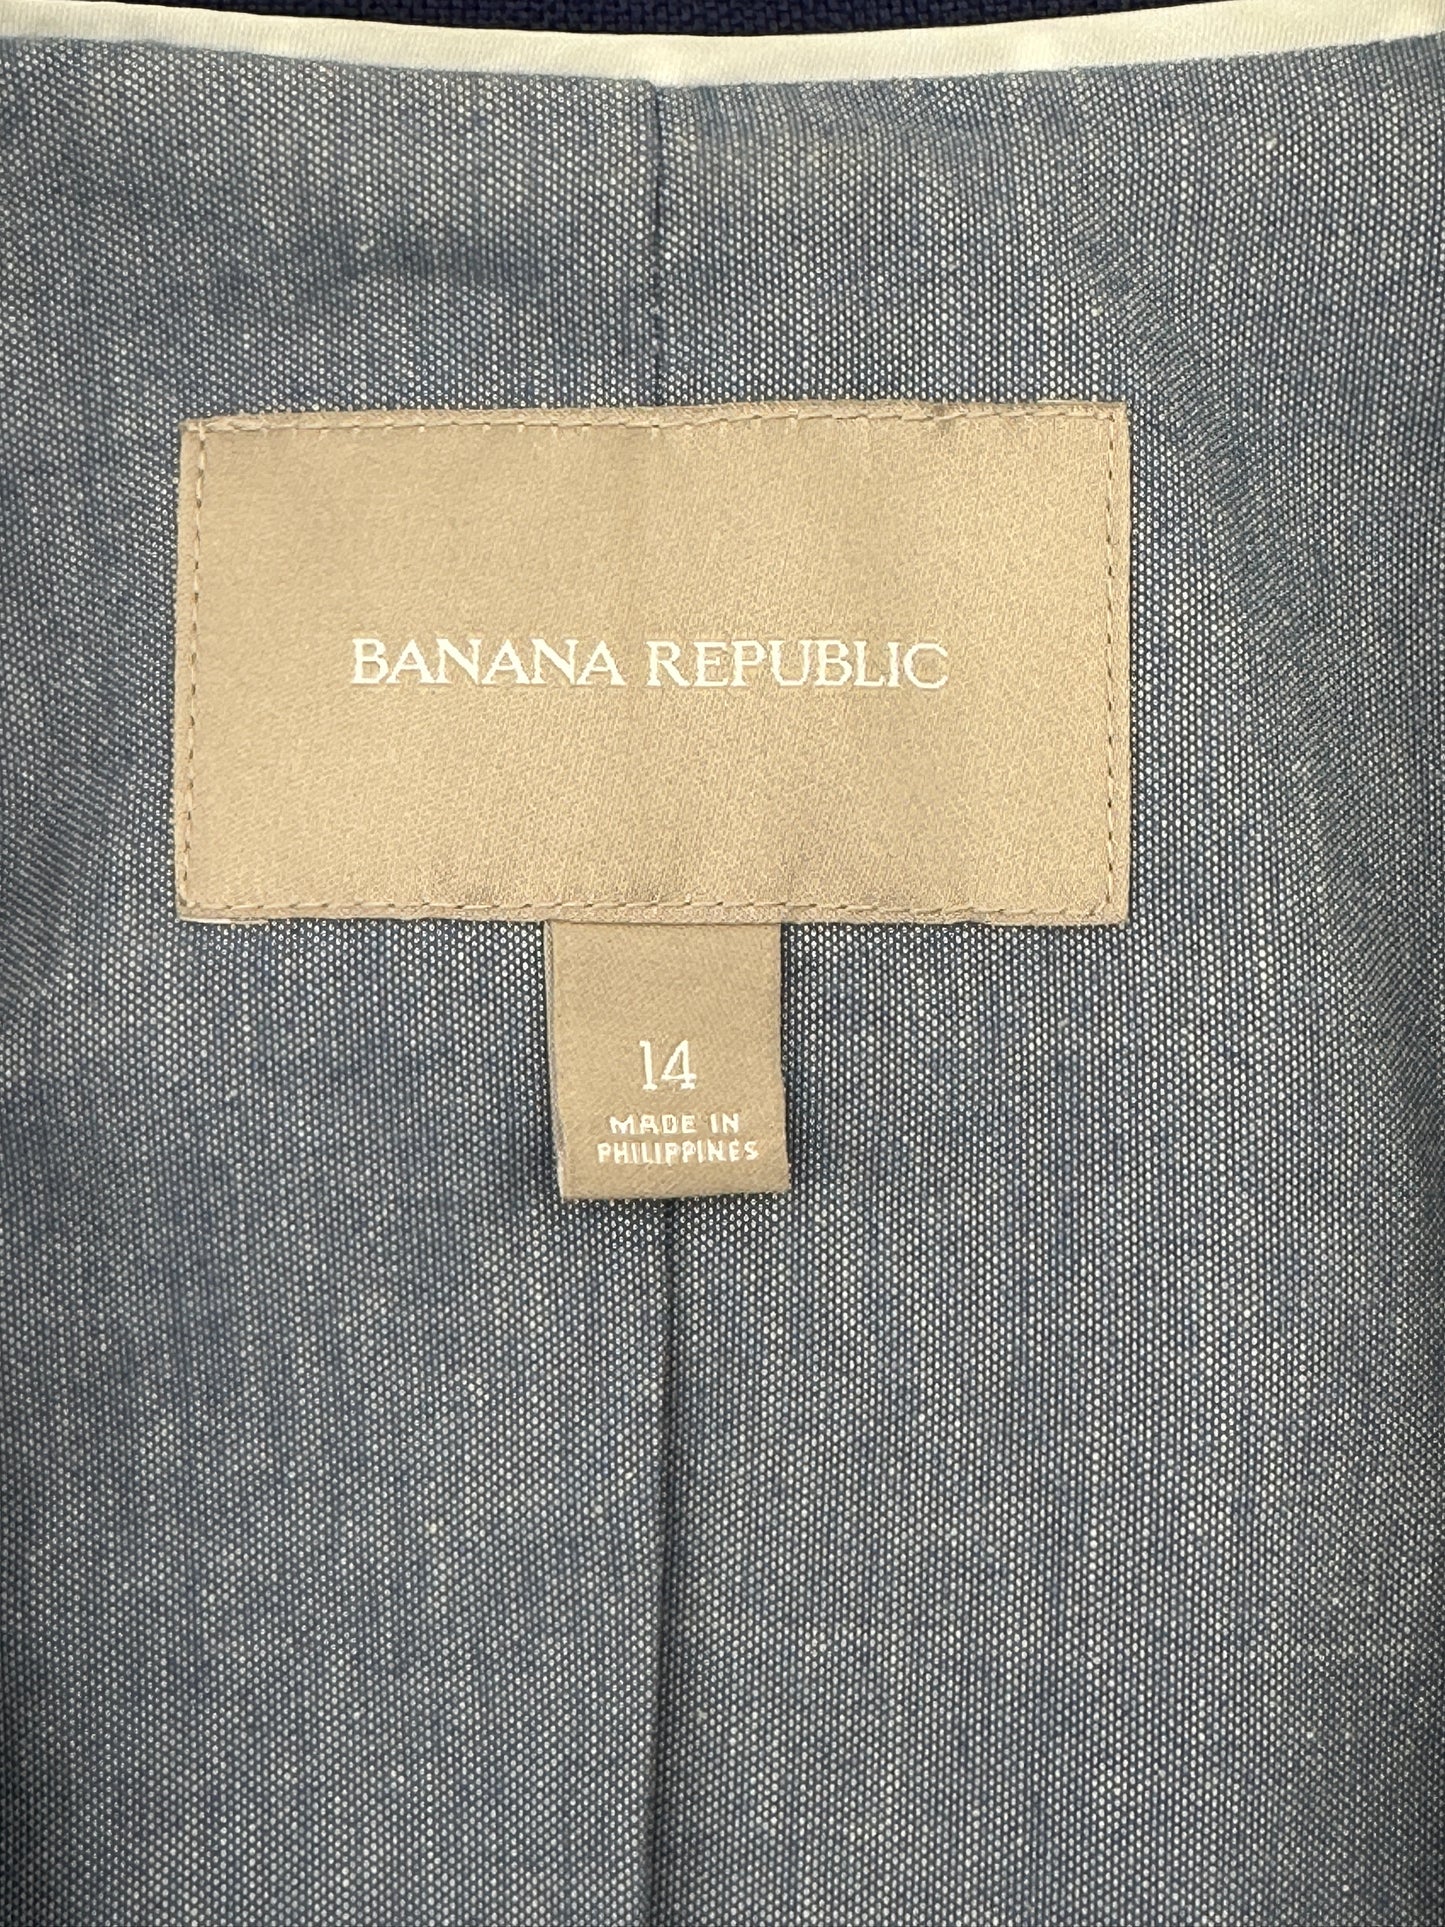 Banana Republic Size 14 Navy Blue w/White Polka Dots Blazer Jacket